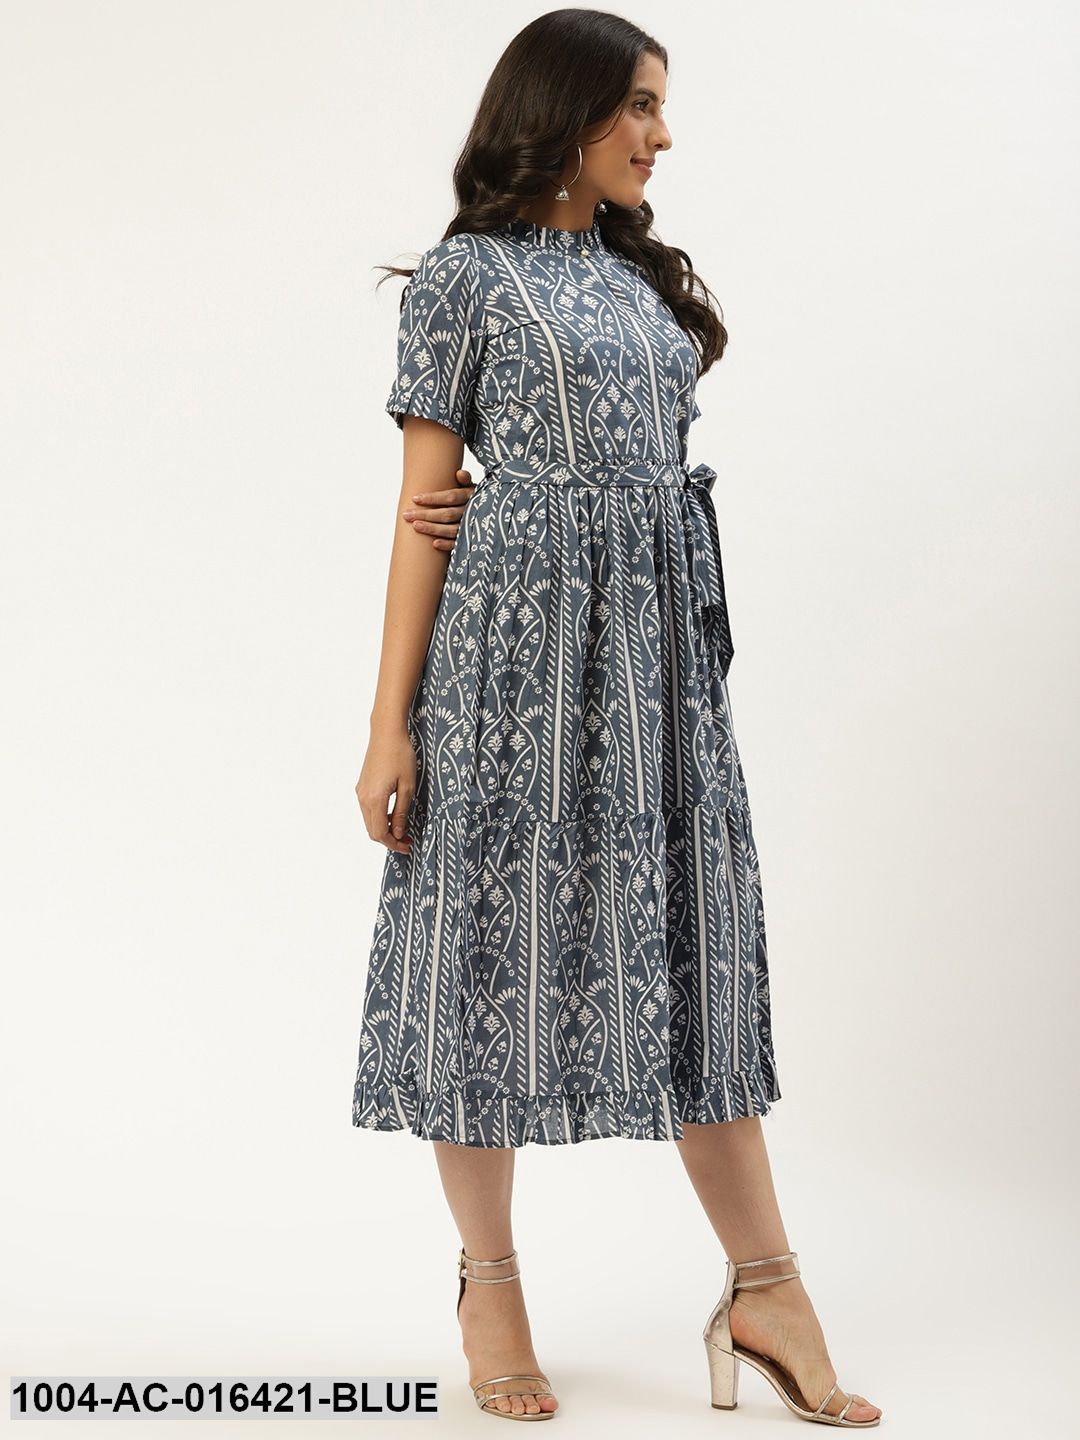 Blue Ethnic Motifs Printed High-neck Cotton A-Line Dress